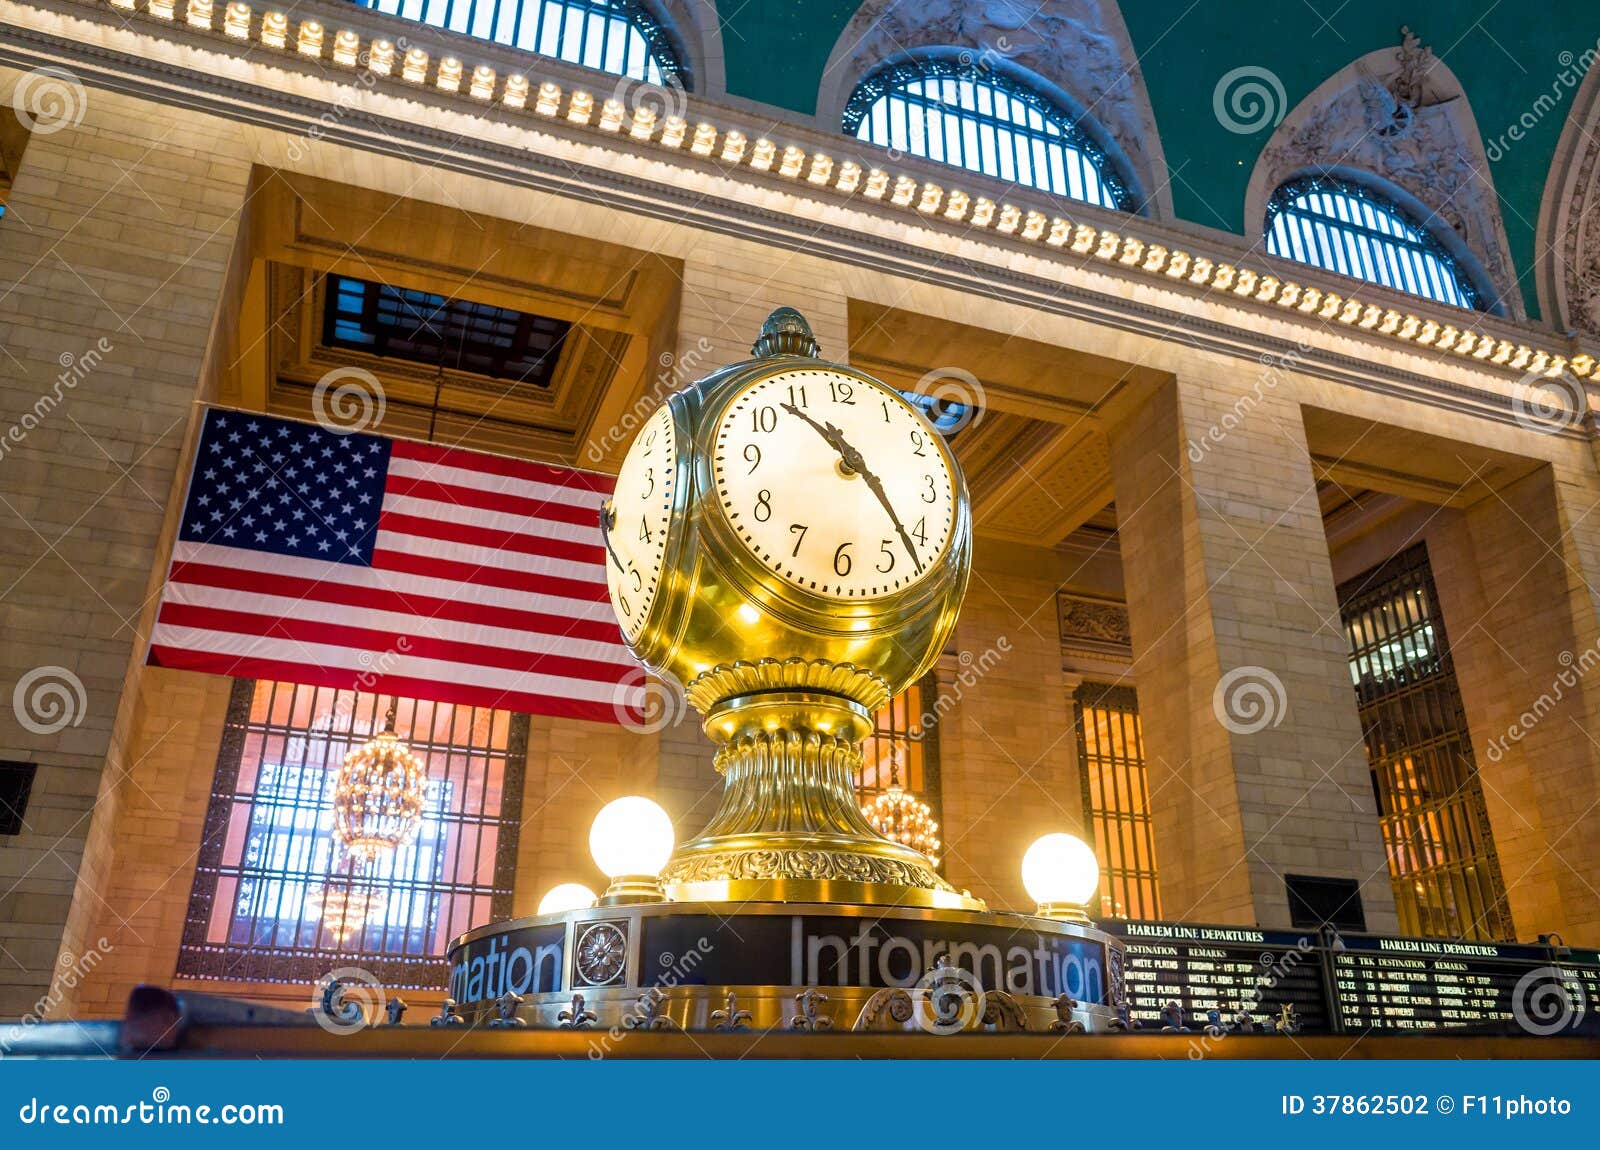 grand central terminal clock